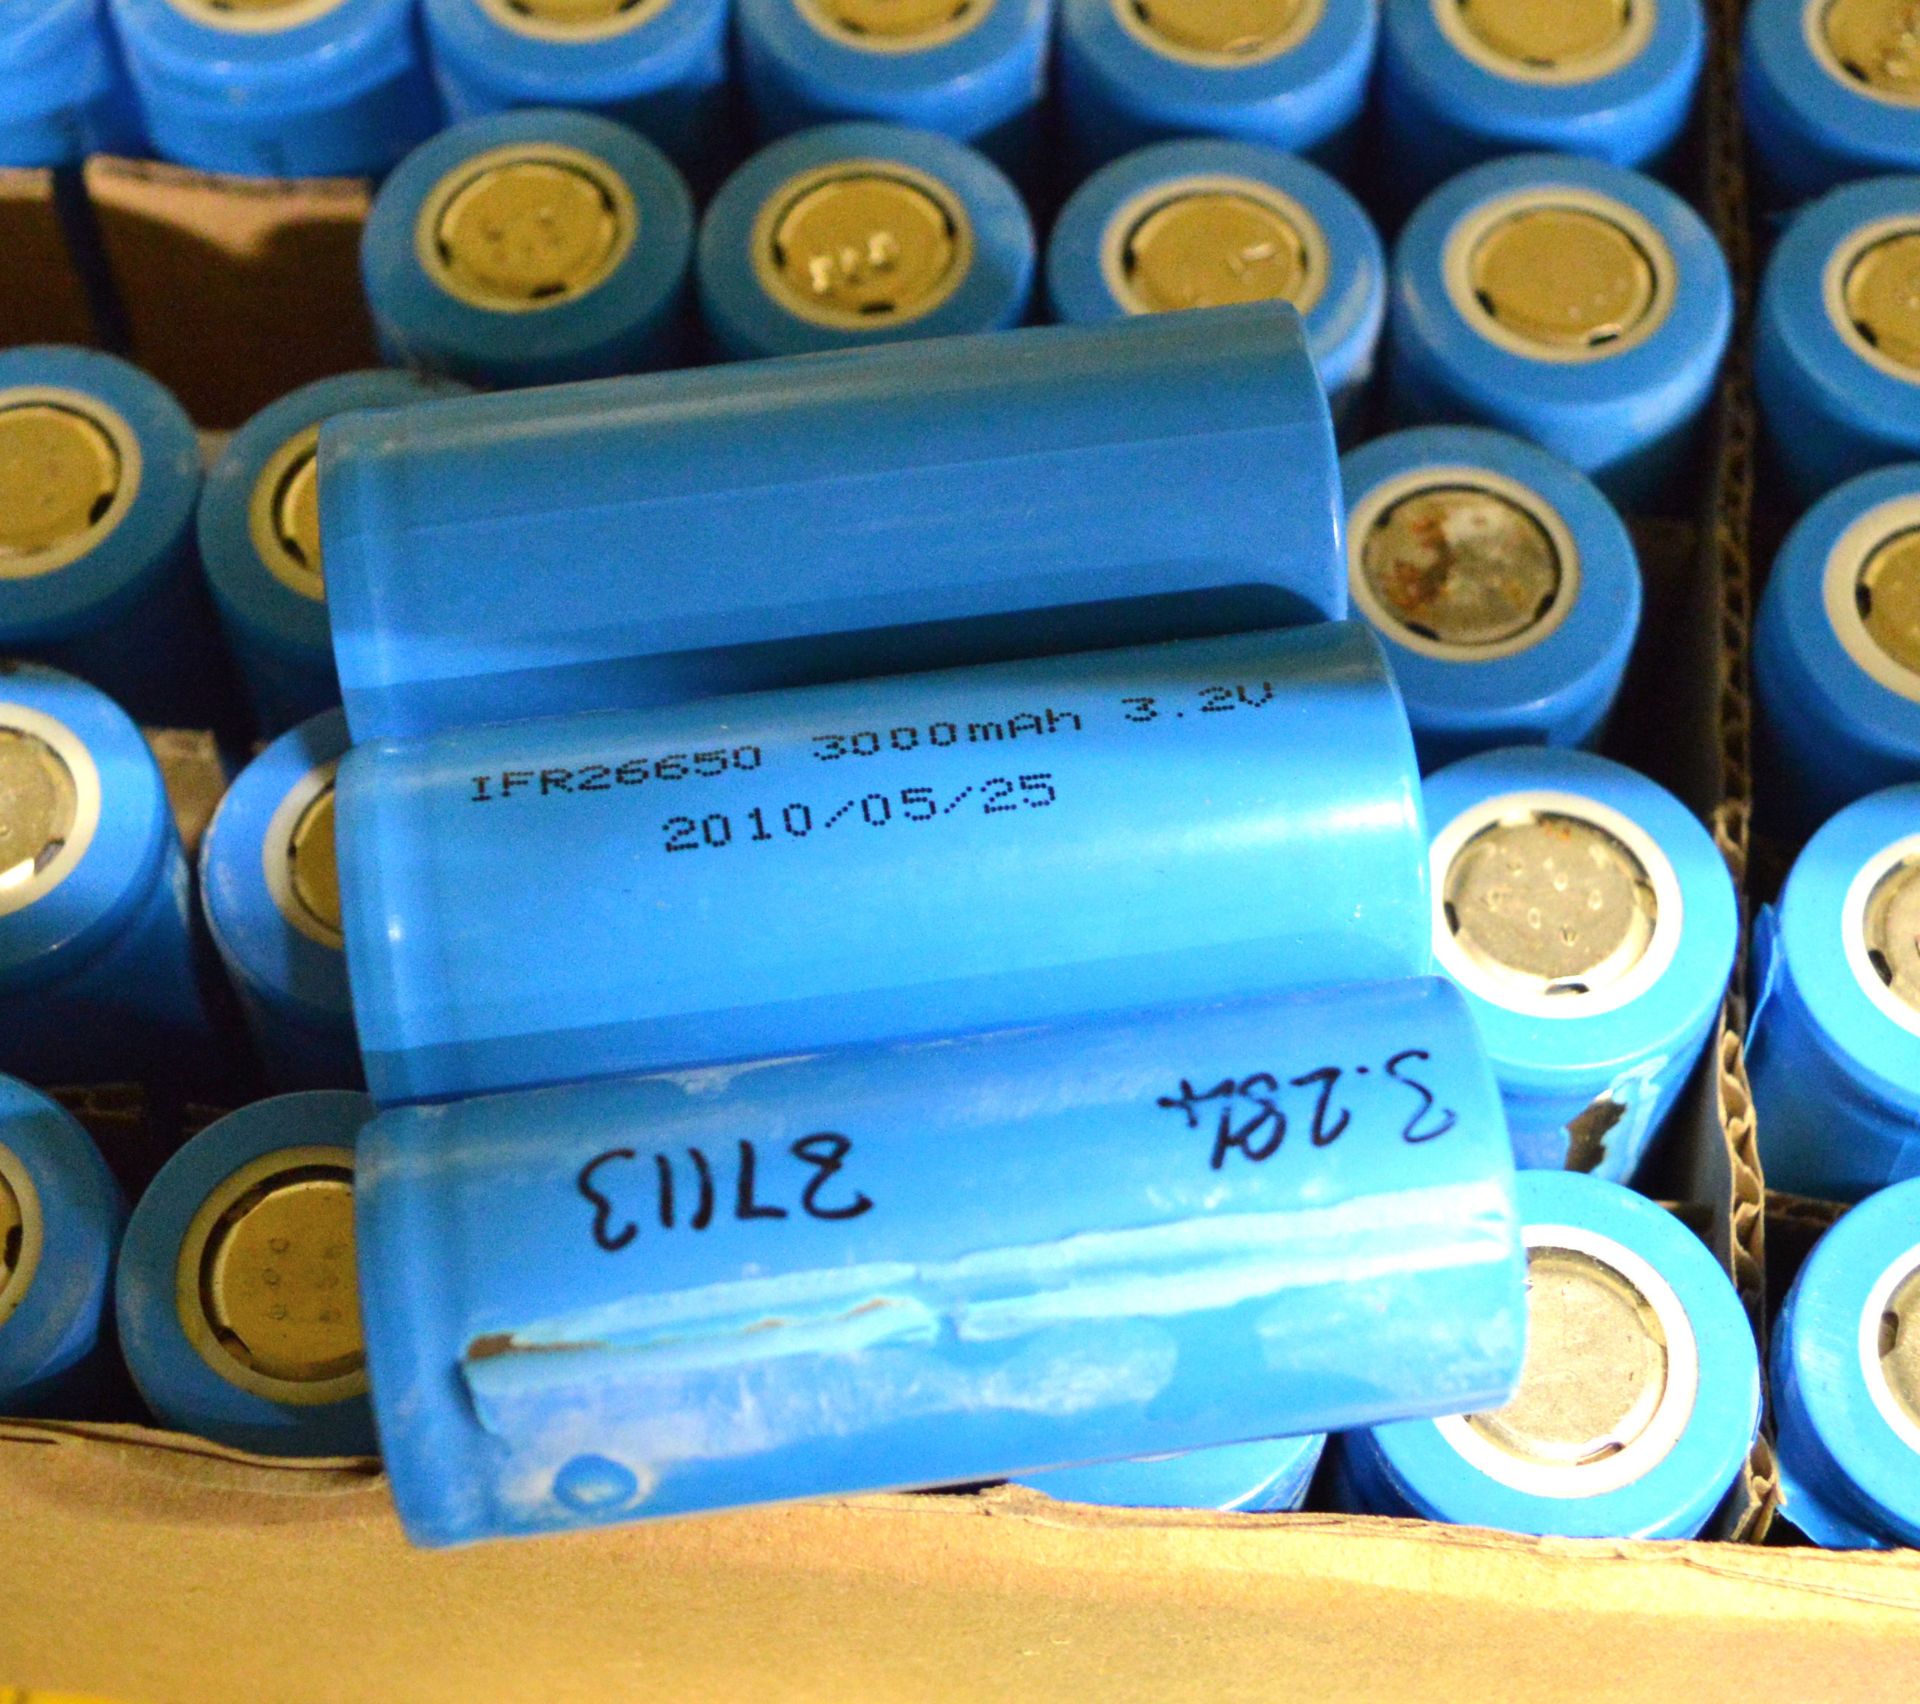 4x Cartons Batteries 3000mAh 3.2V - 64 per carton. - Image 2 of 2